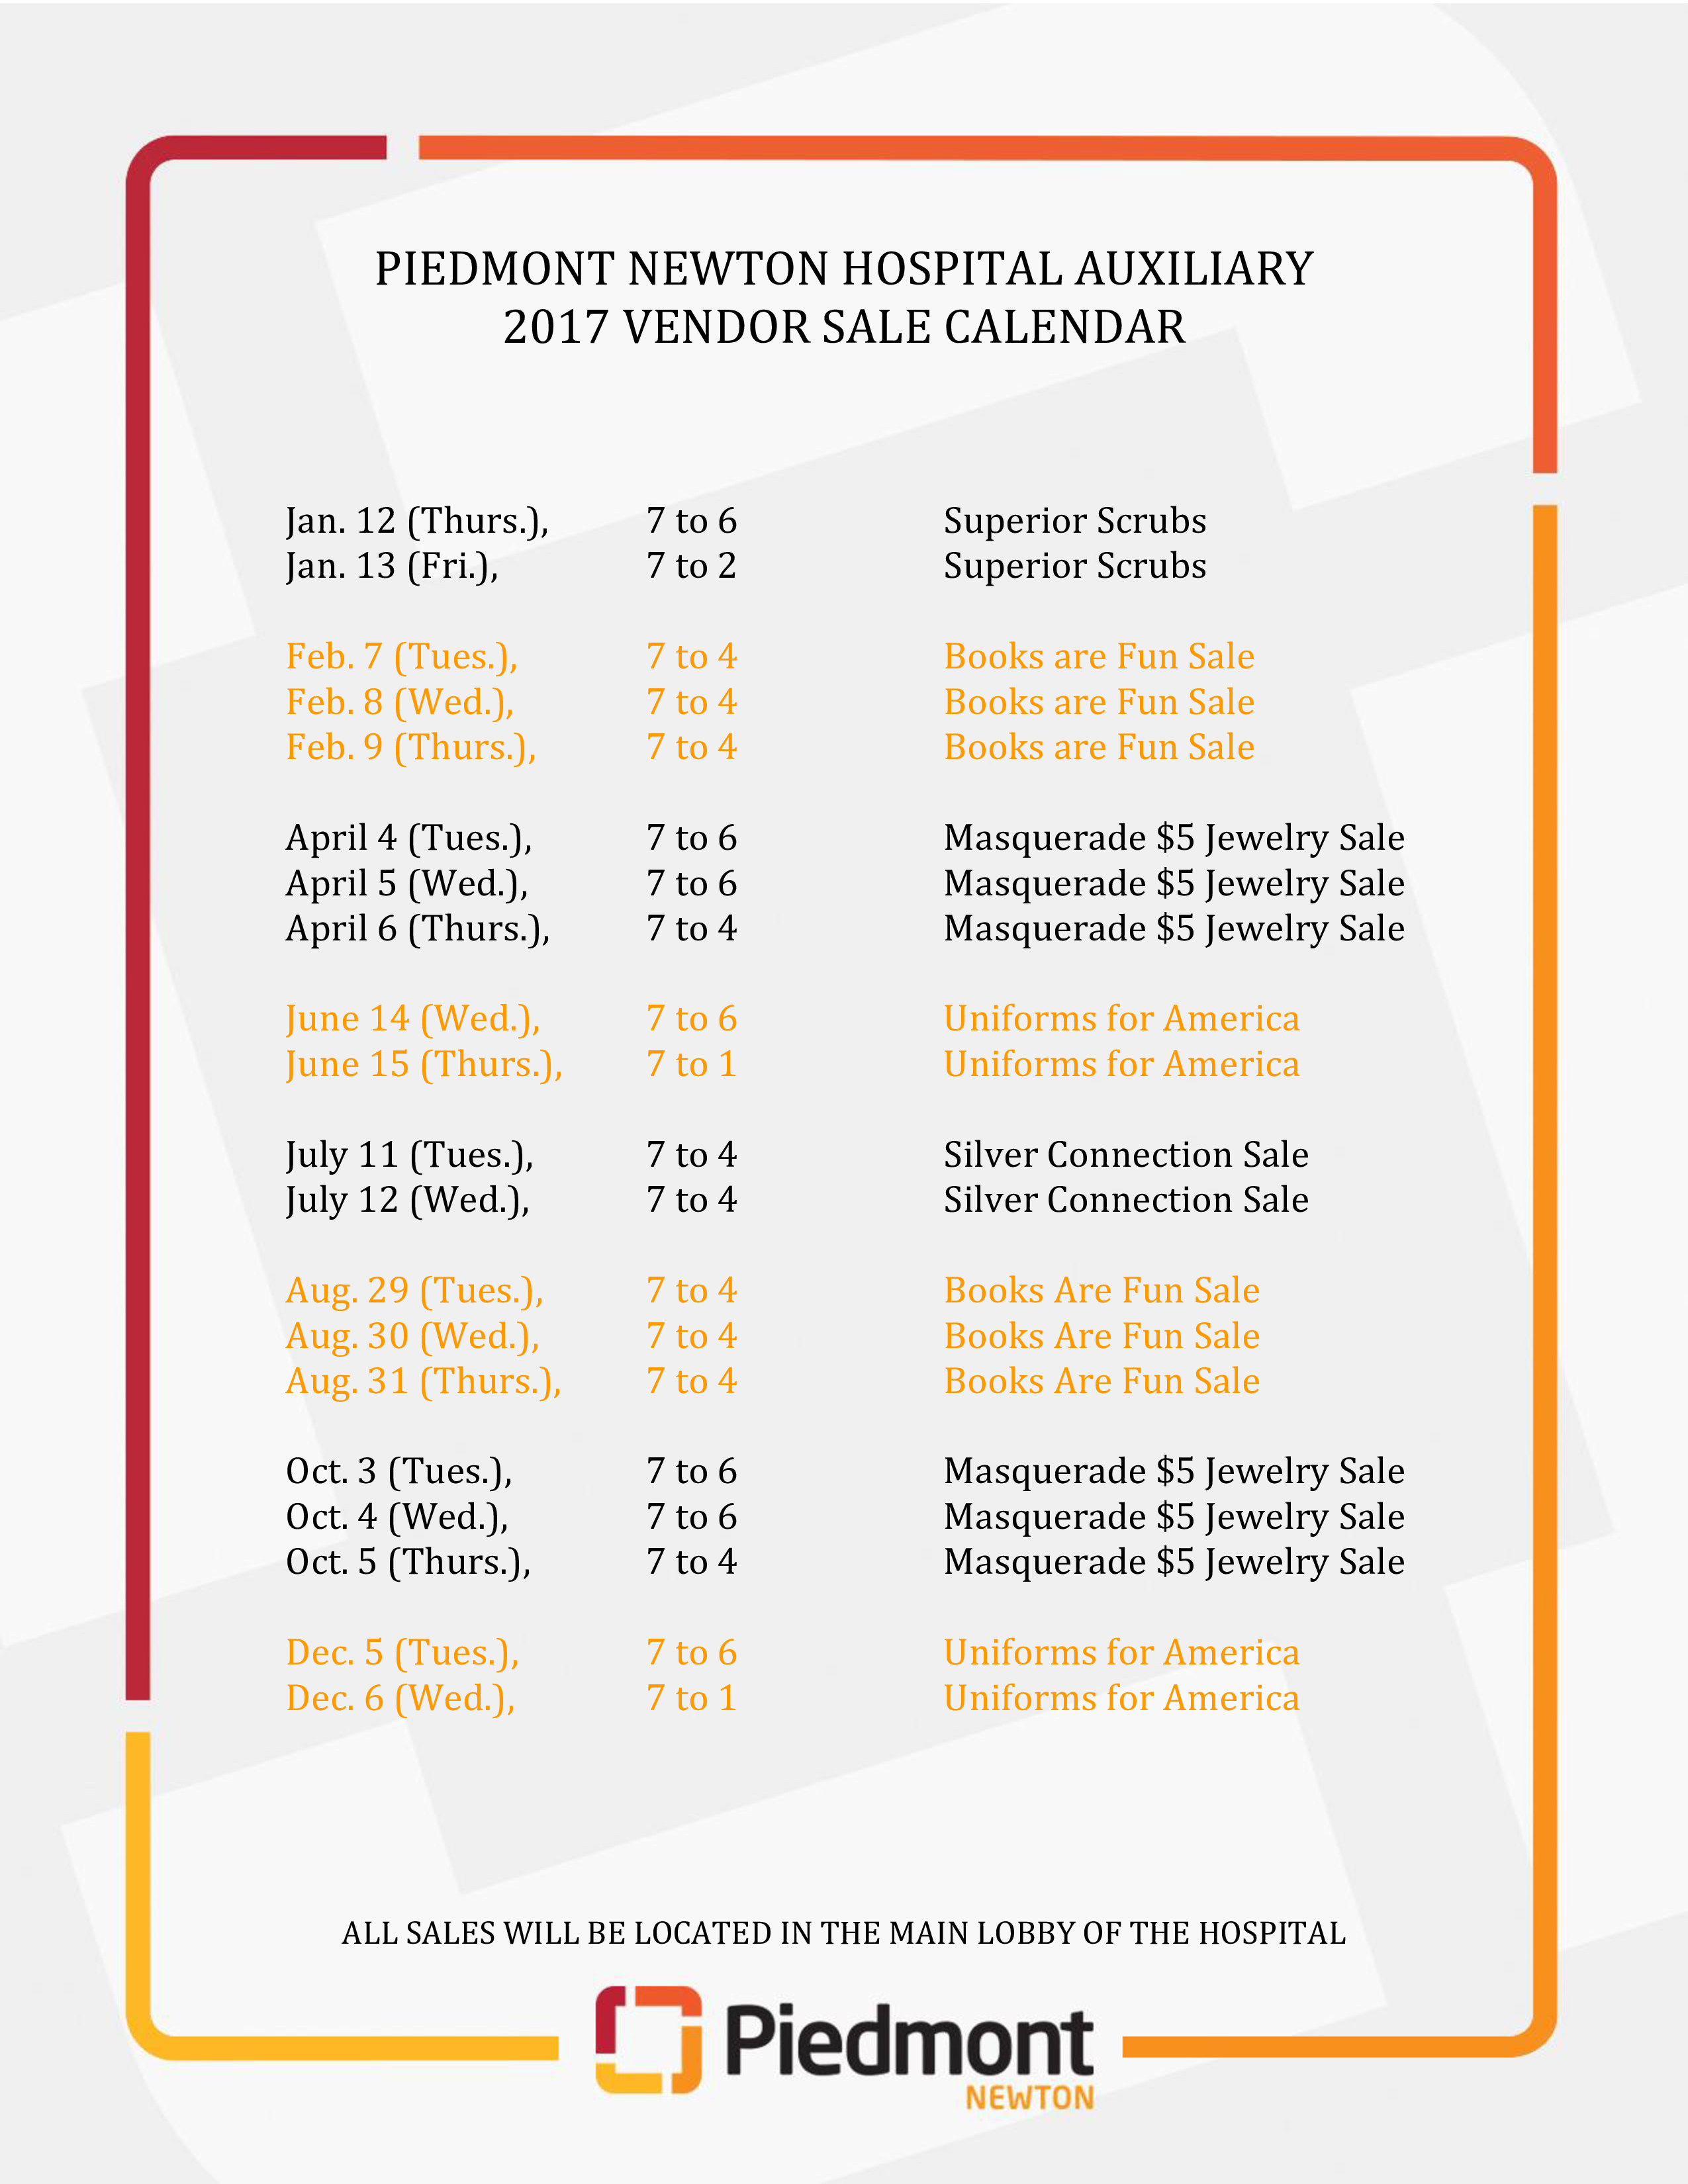 Sales Vendor Calendar main image